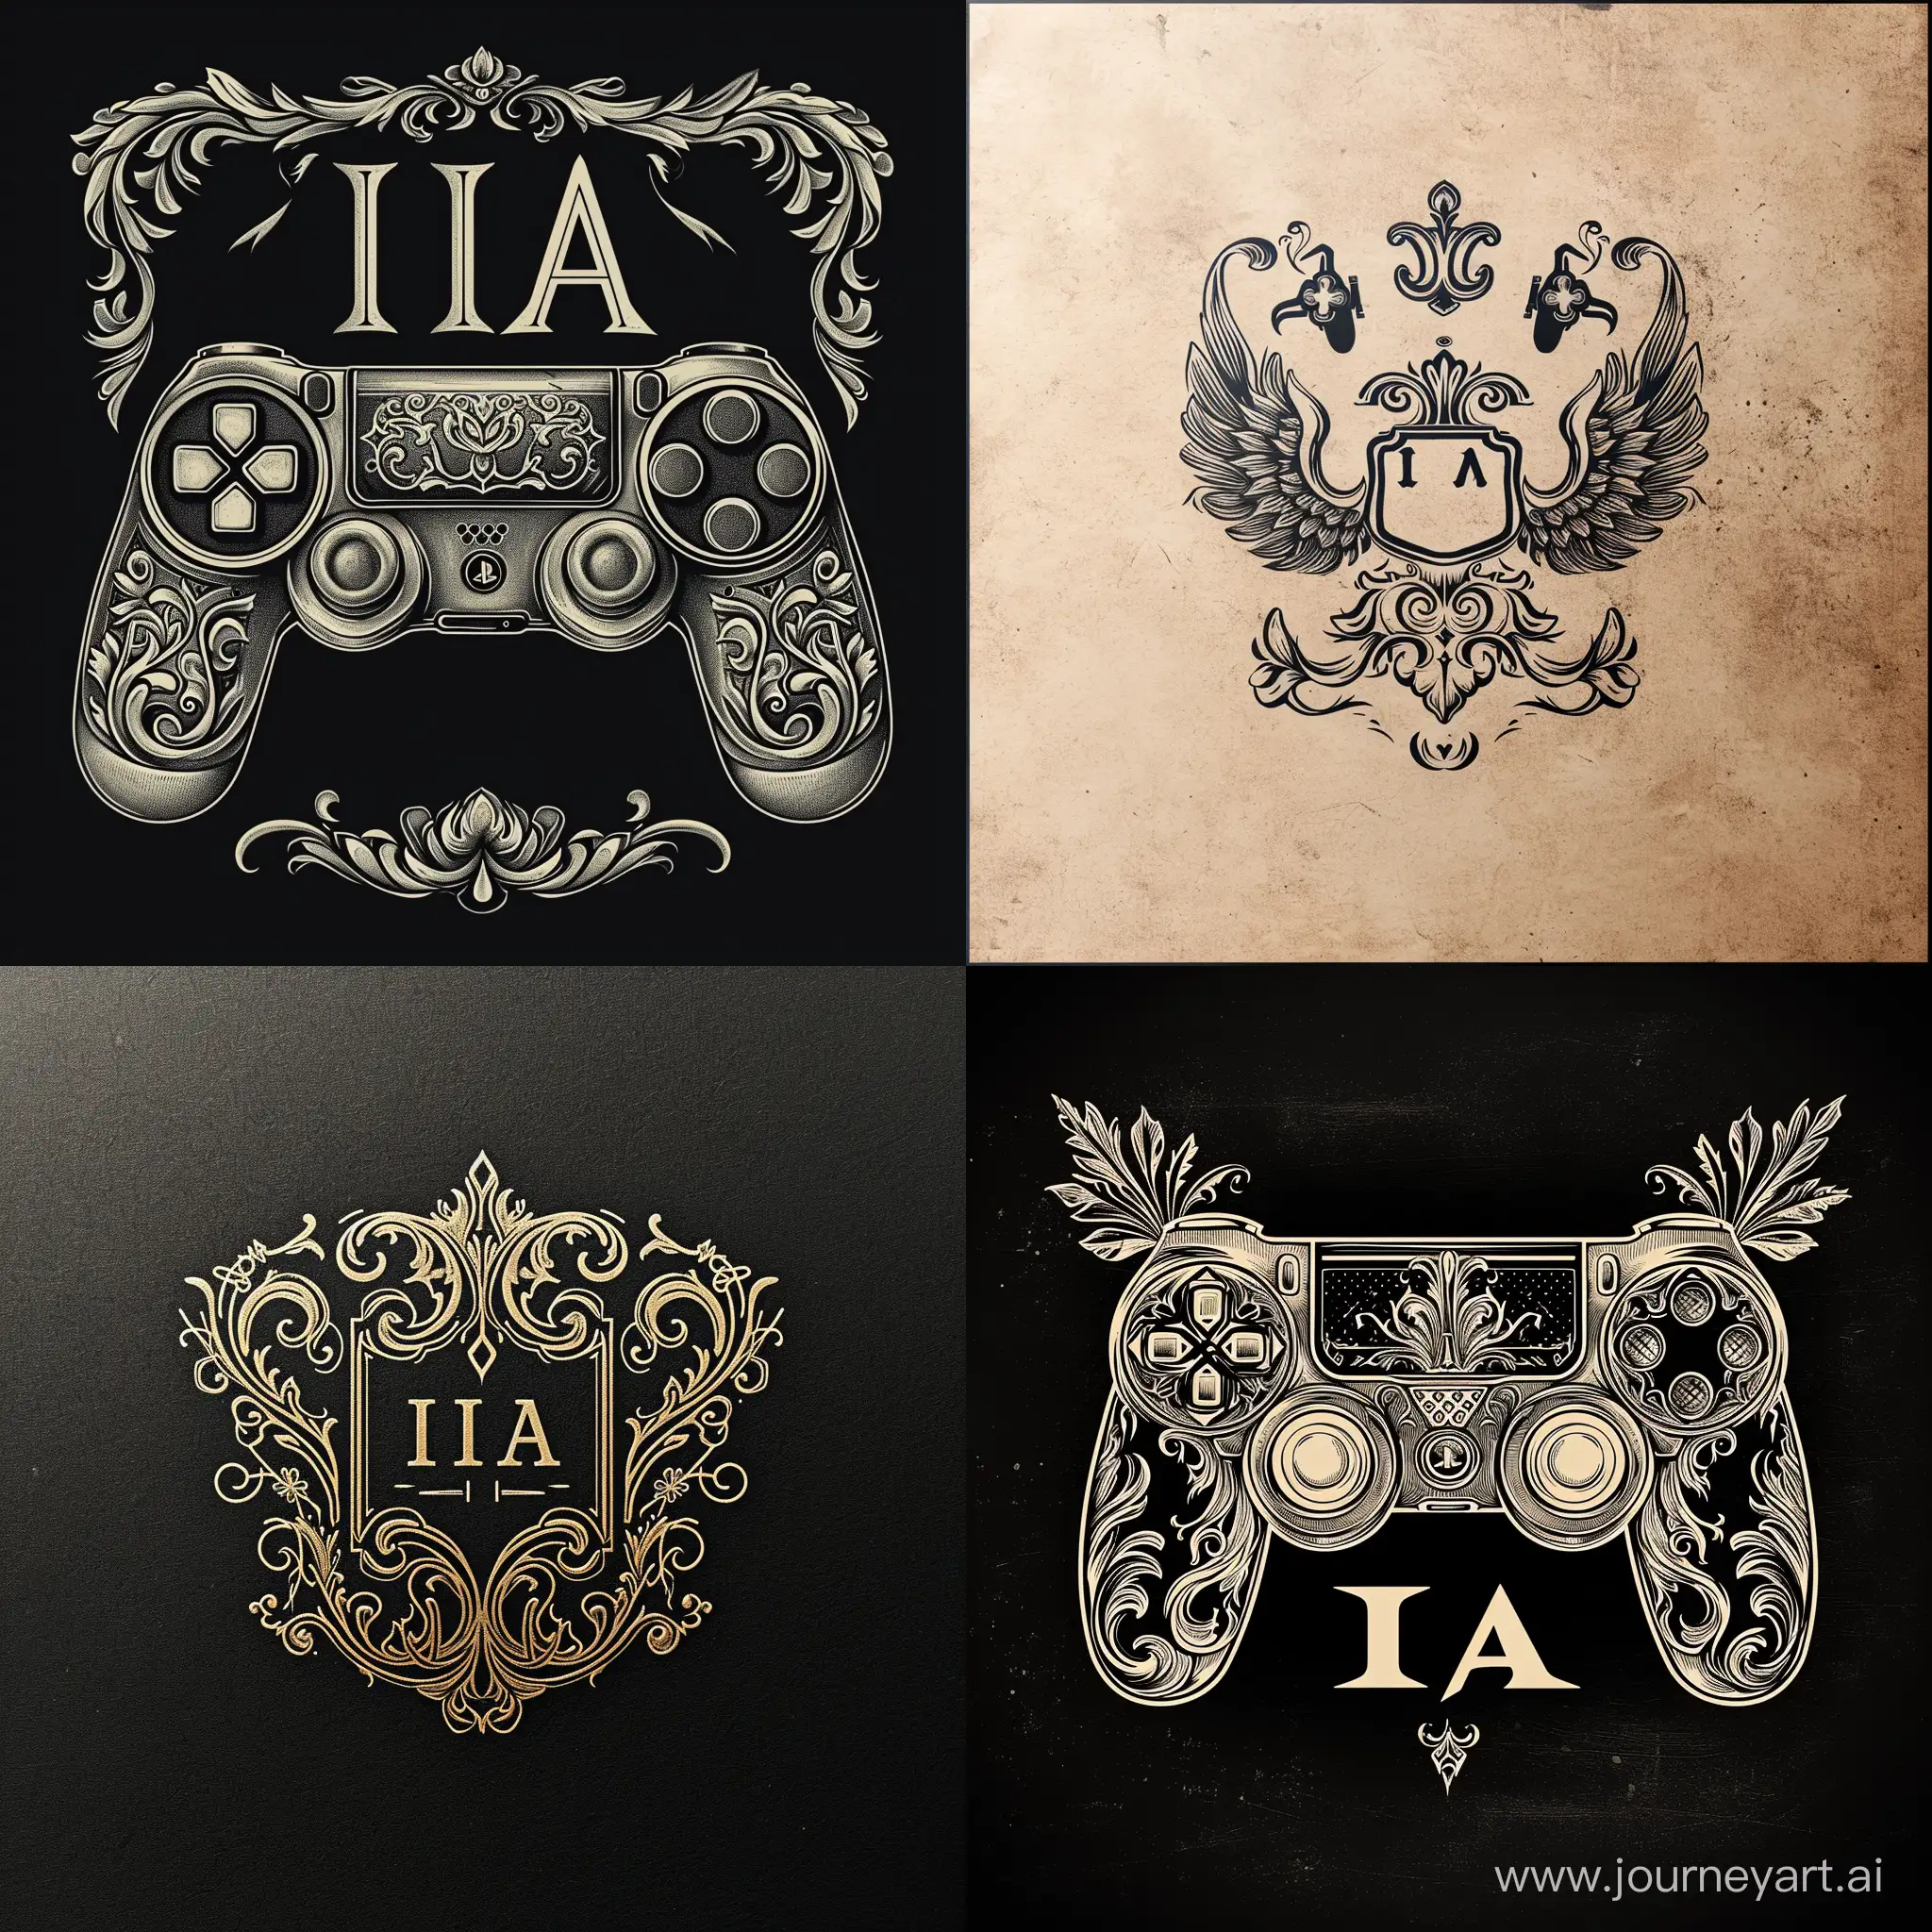 Магазин электроники и видеоигр "ilia" , в античном стиле, нарисуй логотип